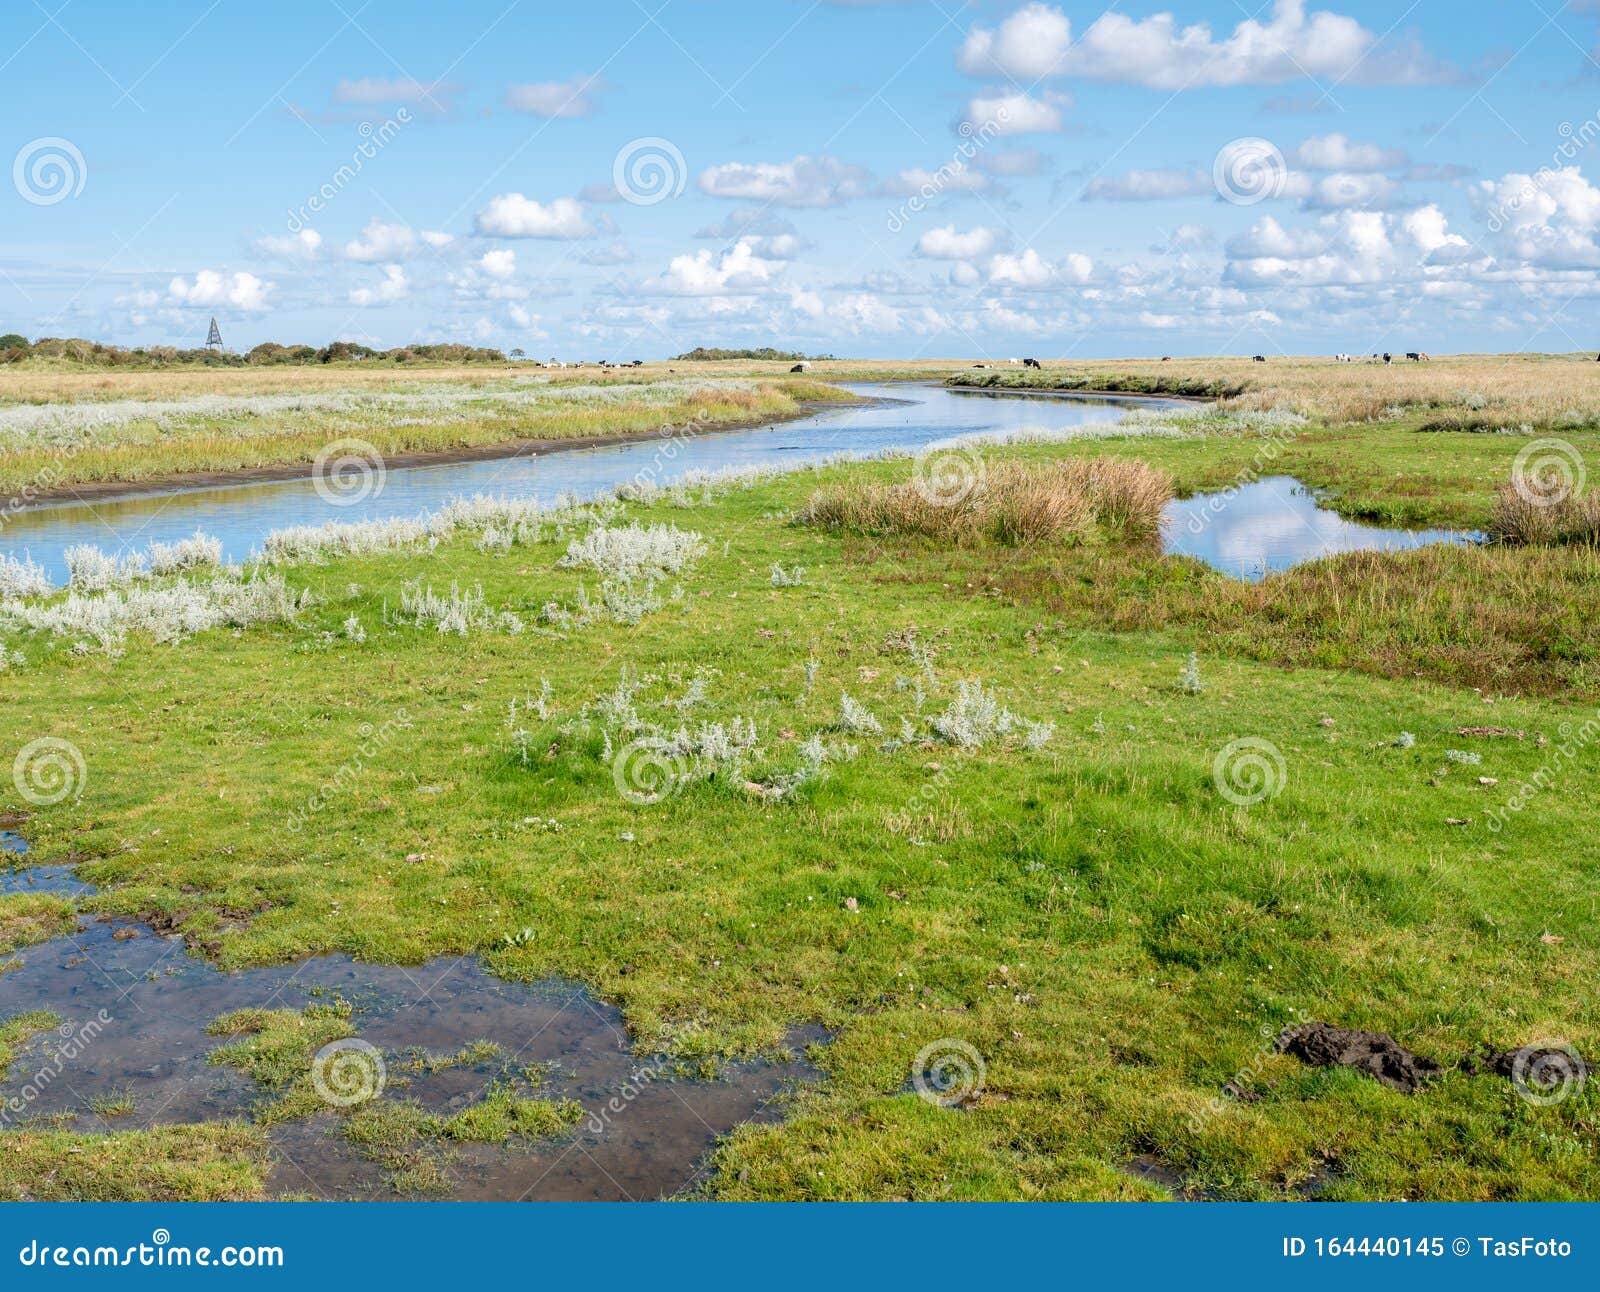 canal in salt marsh near kobbeduinen on schiermonnikoog island, netherlands